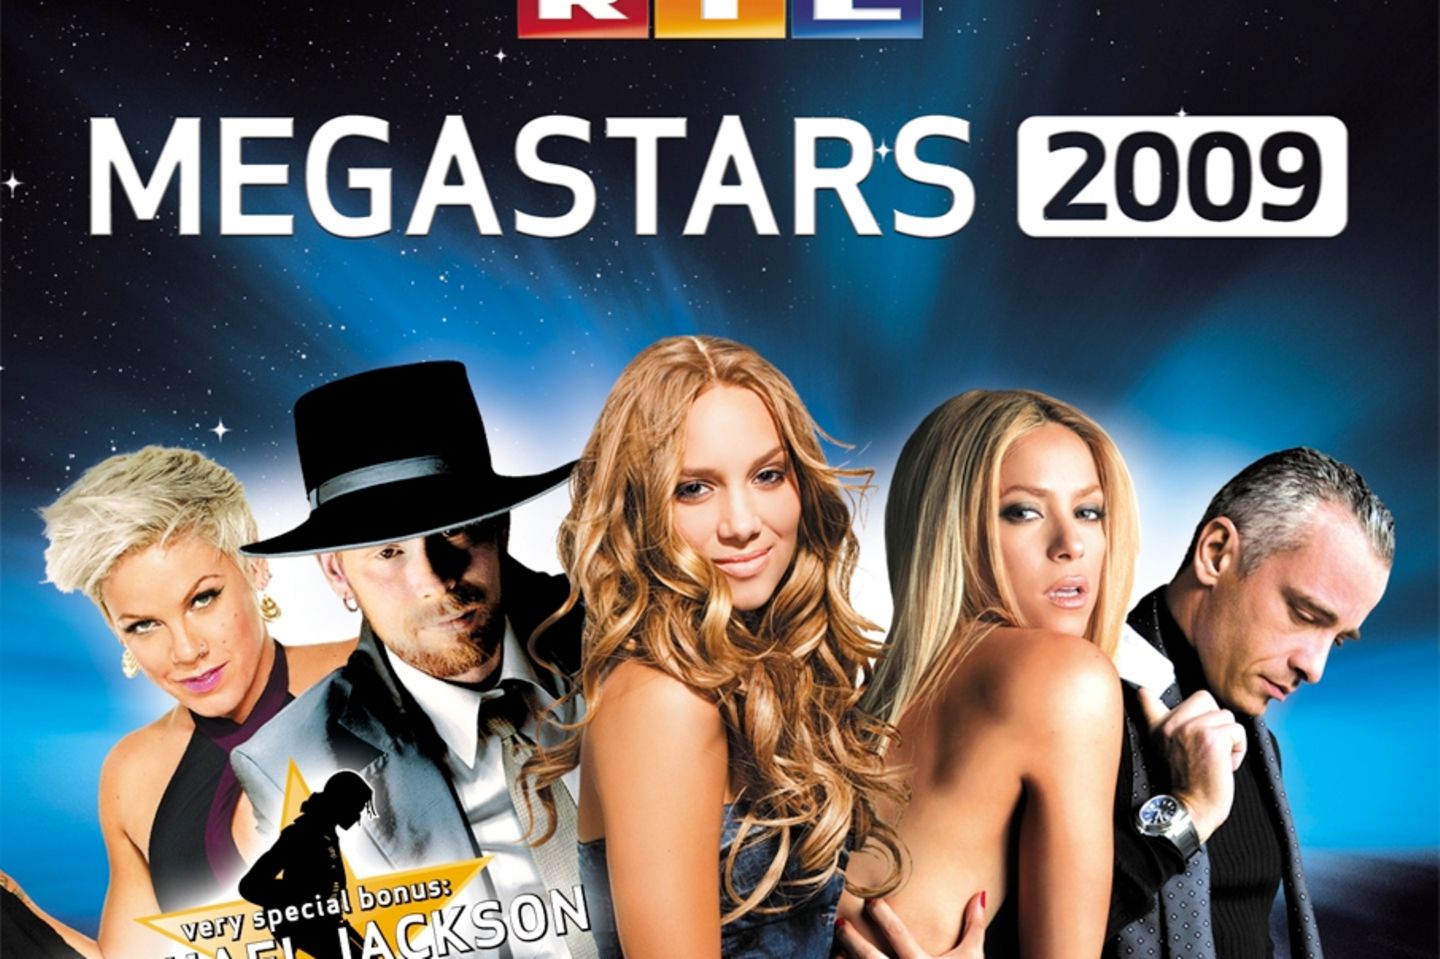 RTL Megastars 2009 - Geballte Hitpower